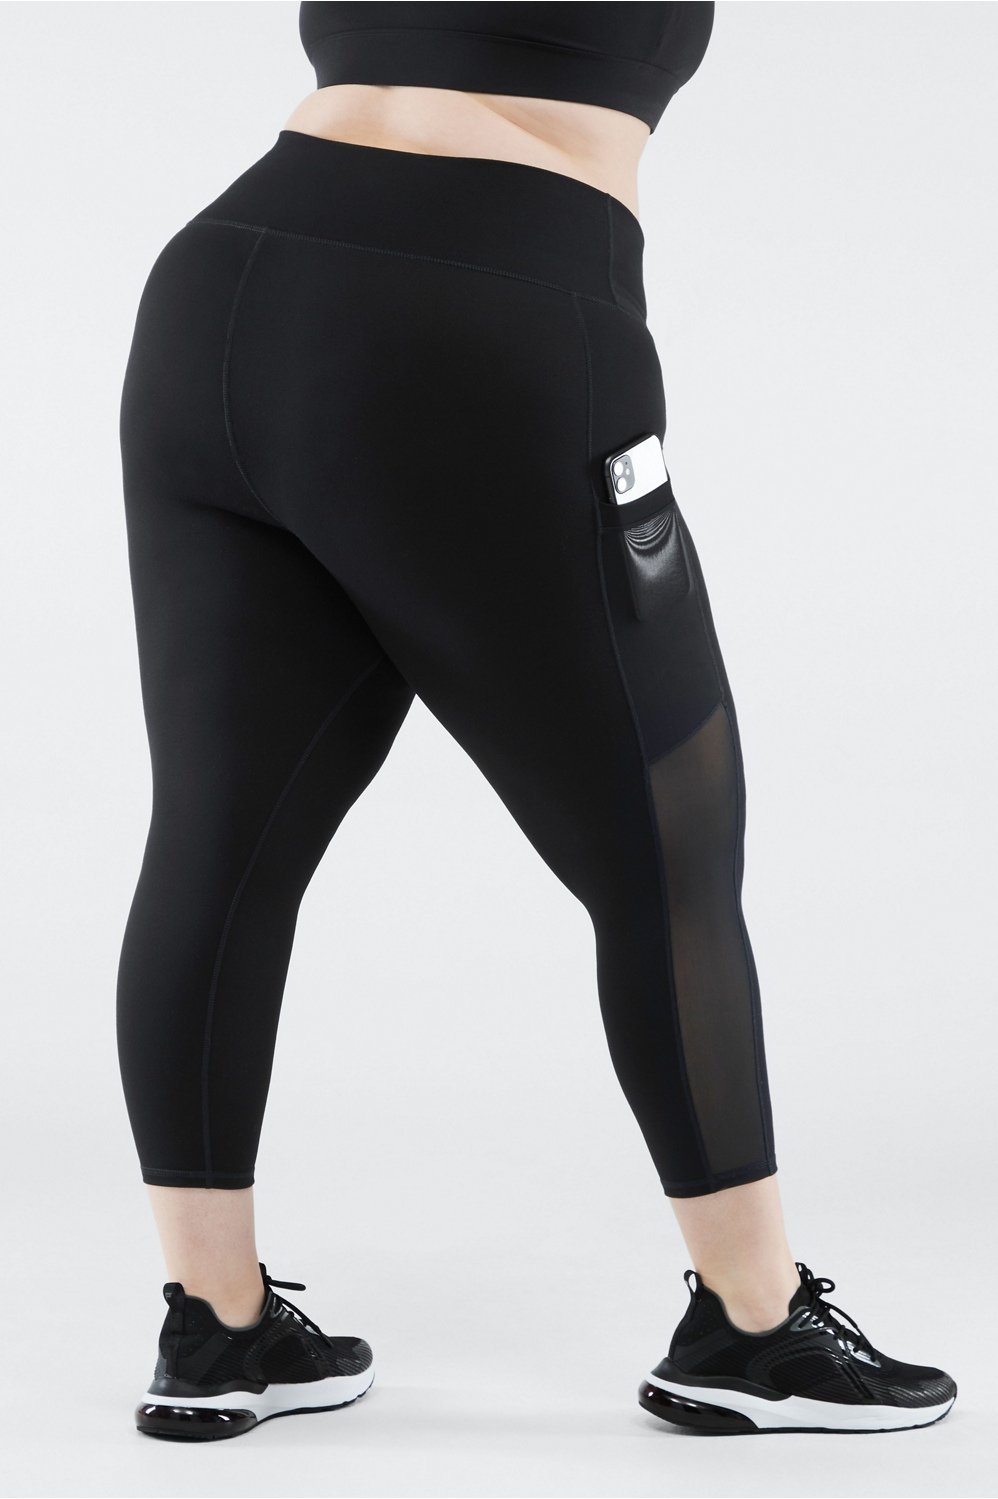 Fabletics Beckham Capri Powerhold Leggings Black Size Small Active Pants  Yoga S